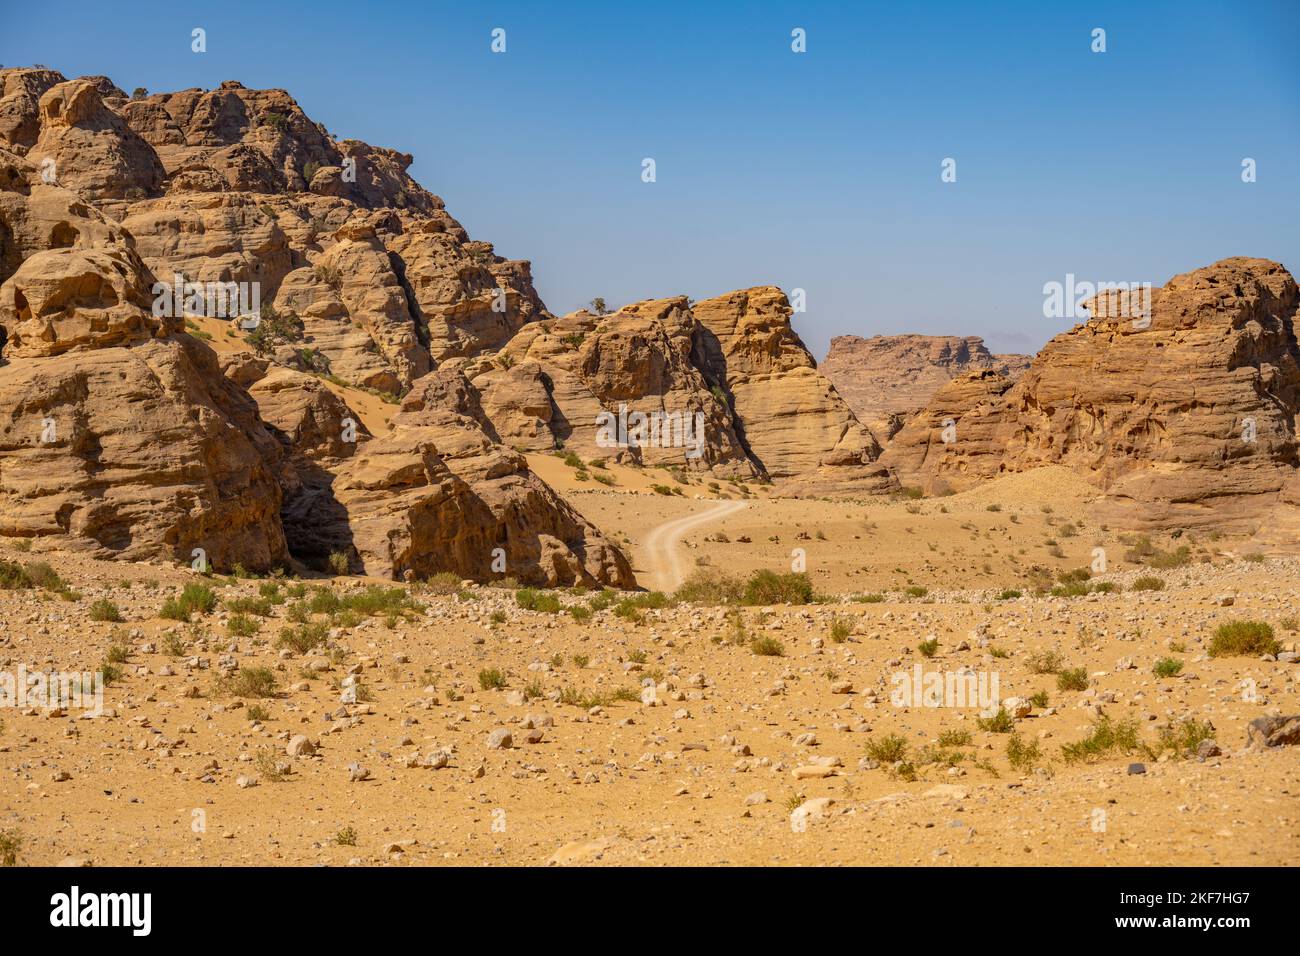 The hills around Little Petra, Siq al-Barid, Jordan Stock Photo